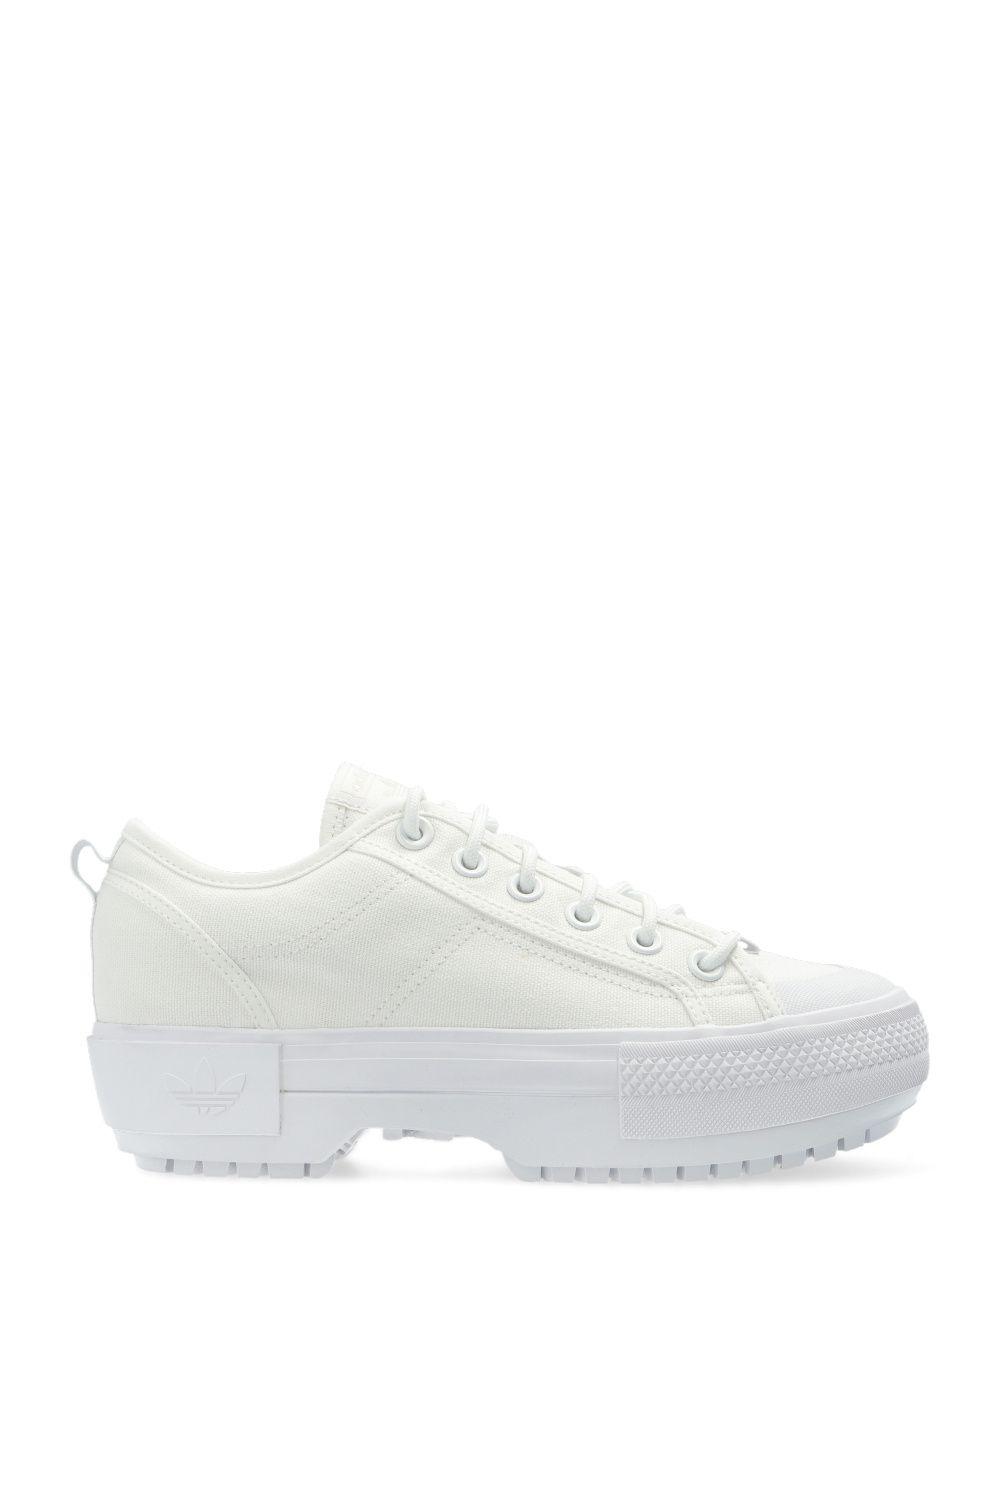 adidas Originals 'nizza Trek Low' Sneakers in White | Lyst